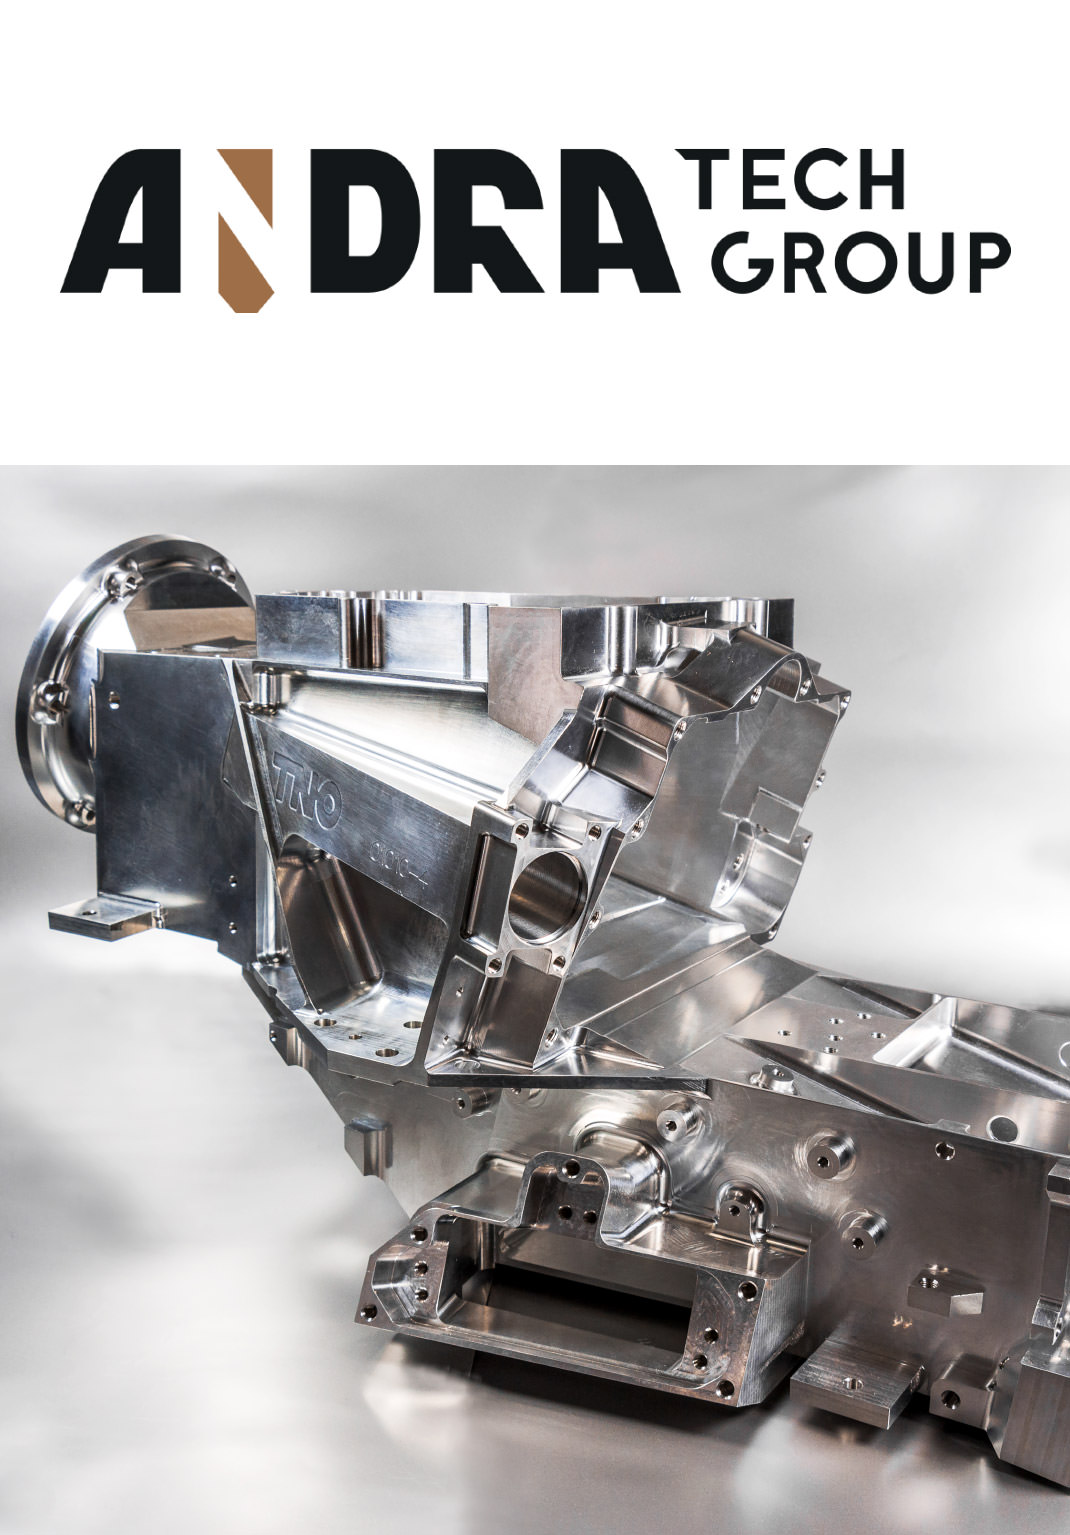 Andra Tech Group logo image